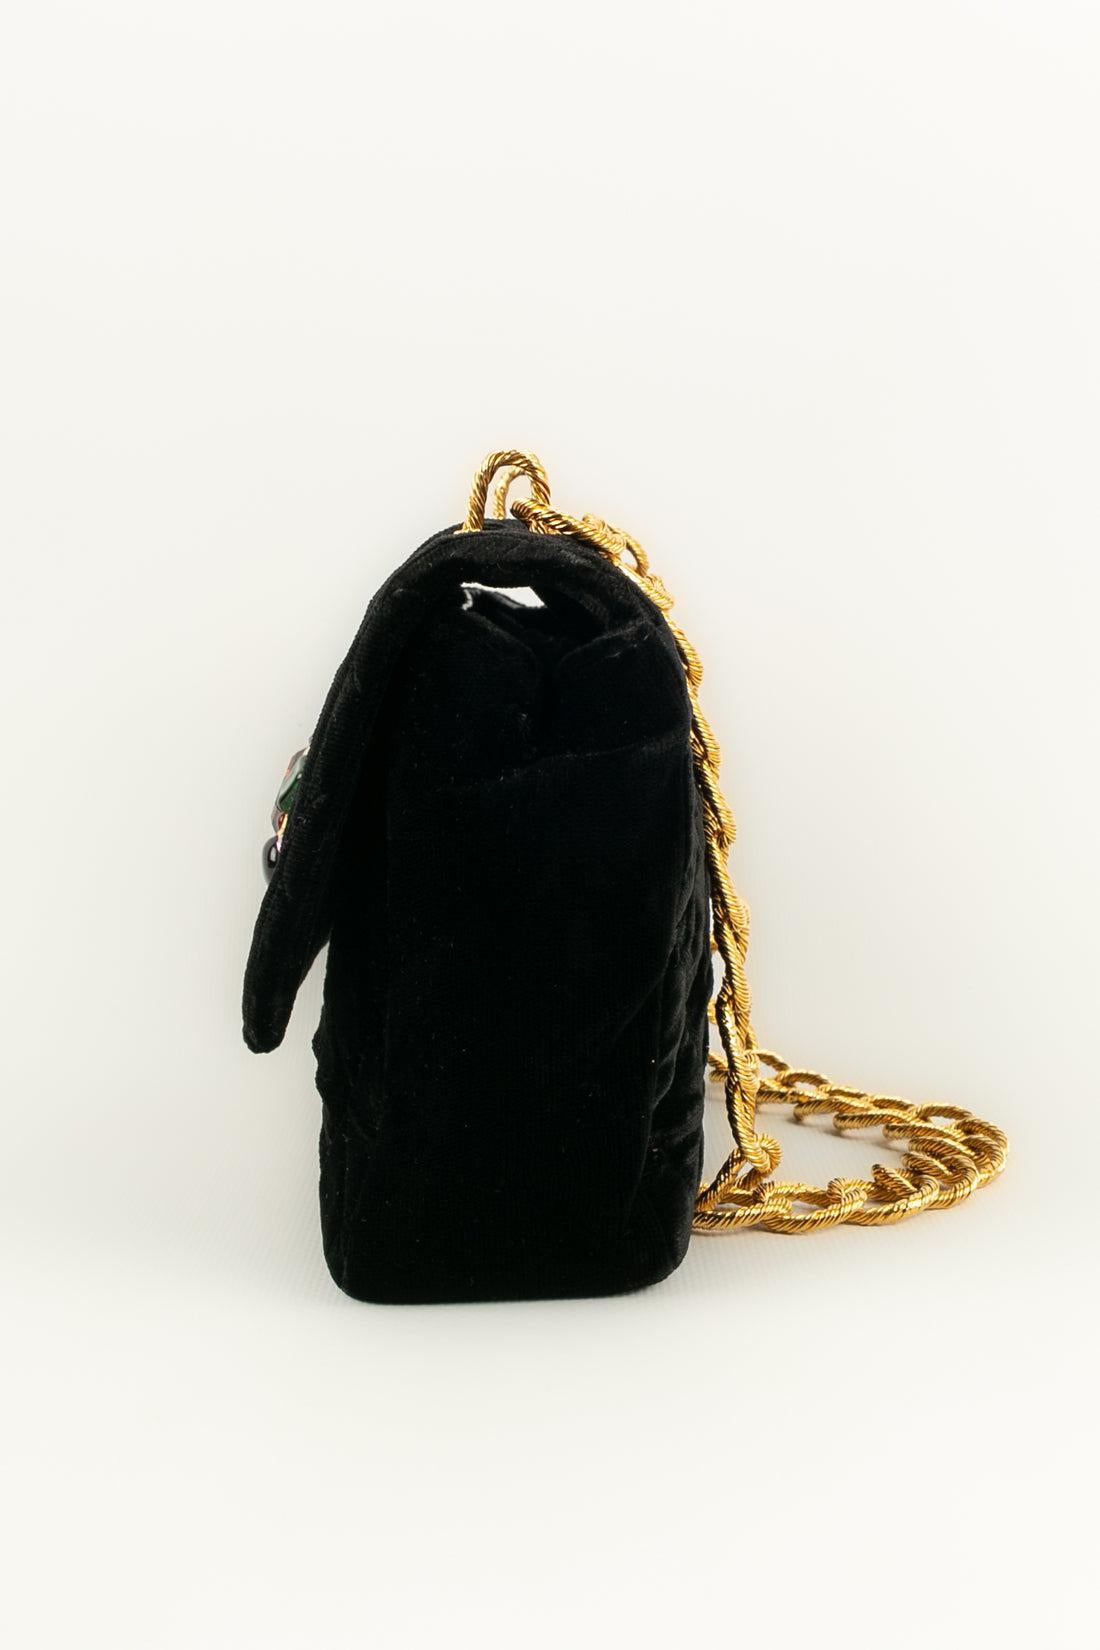 Chanel Jewel Bag in Black Velvet, 1989 / 1991 In Good Condition For Sale In SAINT-OUEN-SUR-SEINE, FR